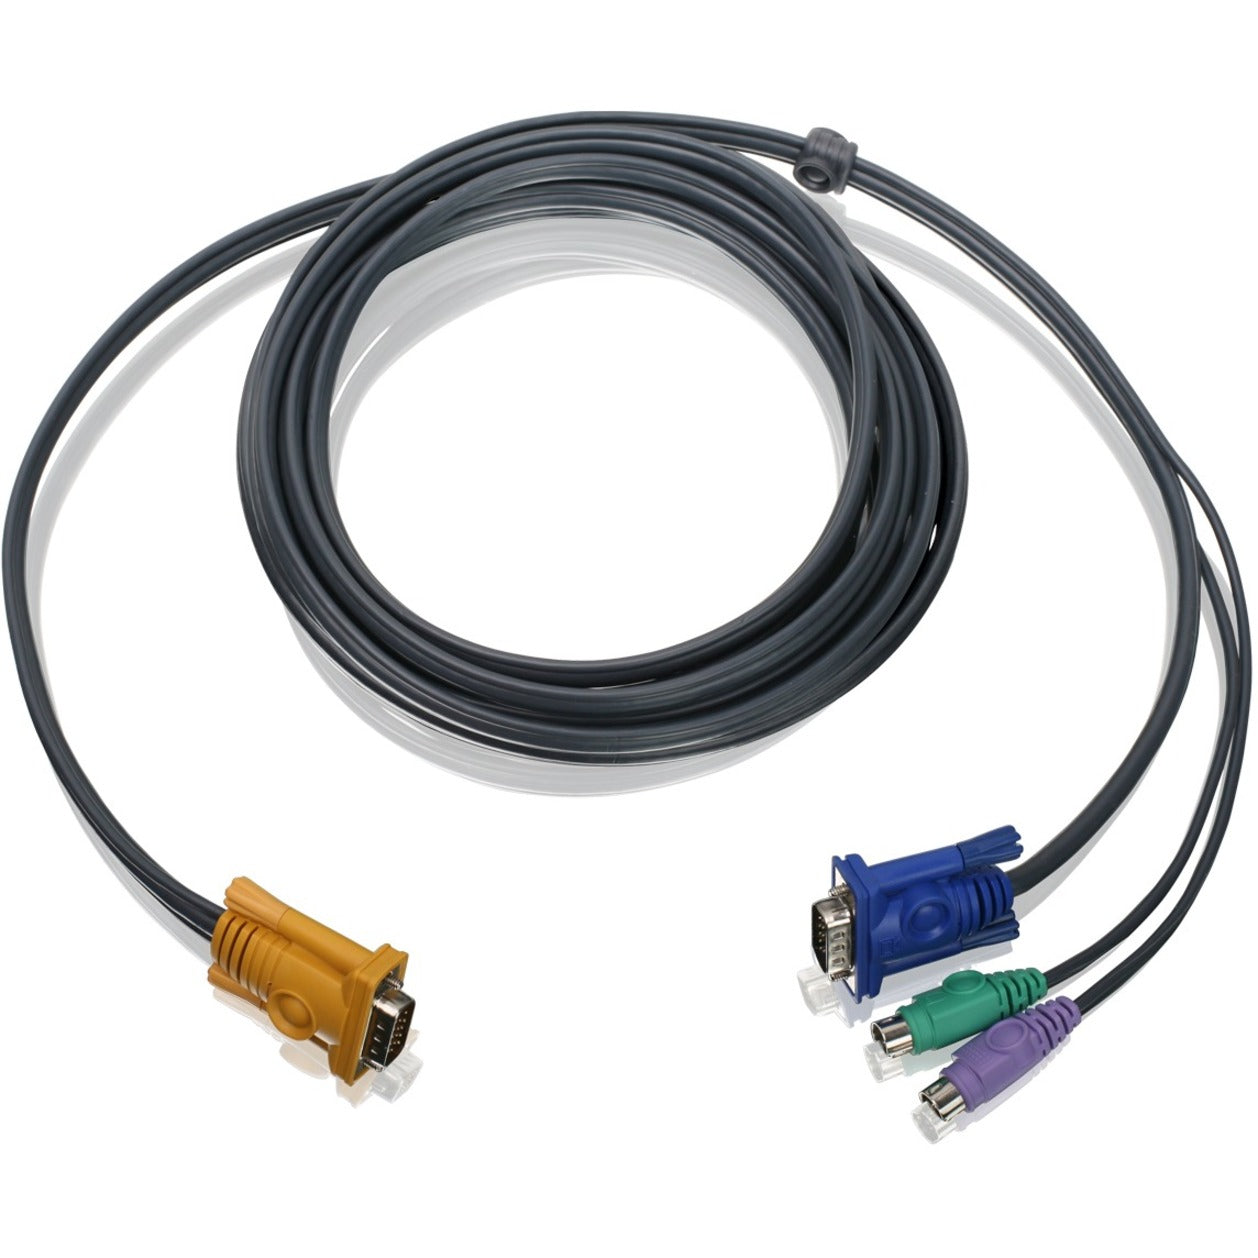 IOGEAR G2L5203P PS/2 KVM Cable 10 Ft, Copper Conductor, HD-15 Male Connectors, Black